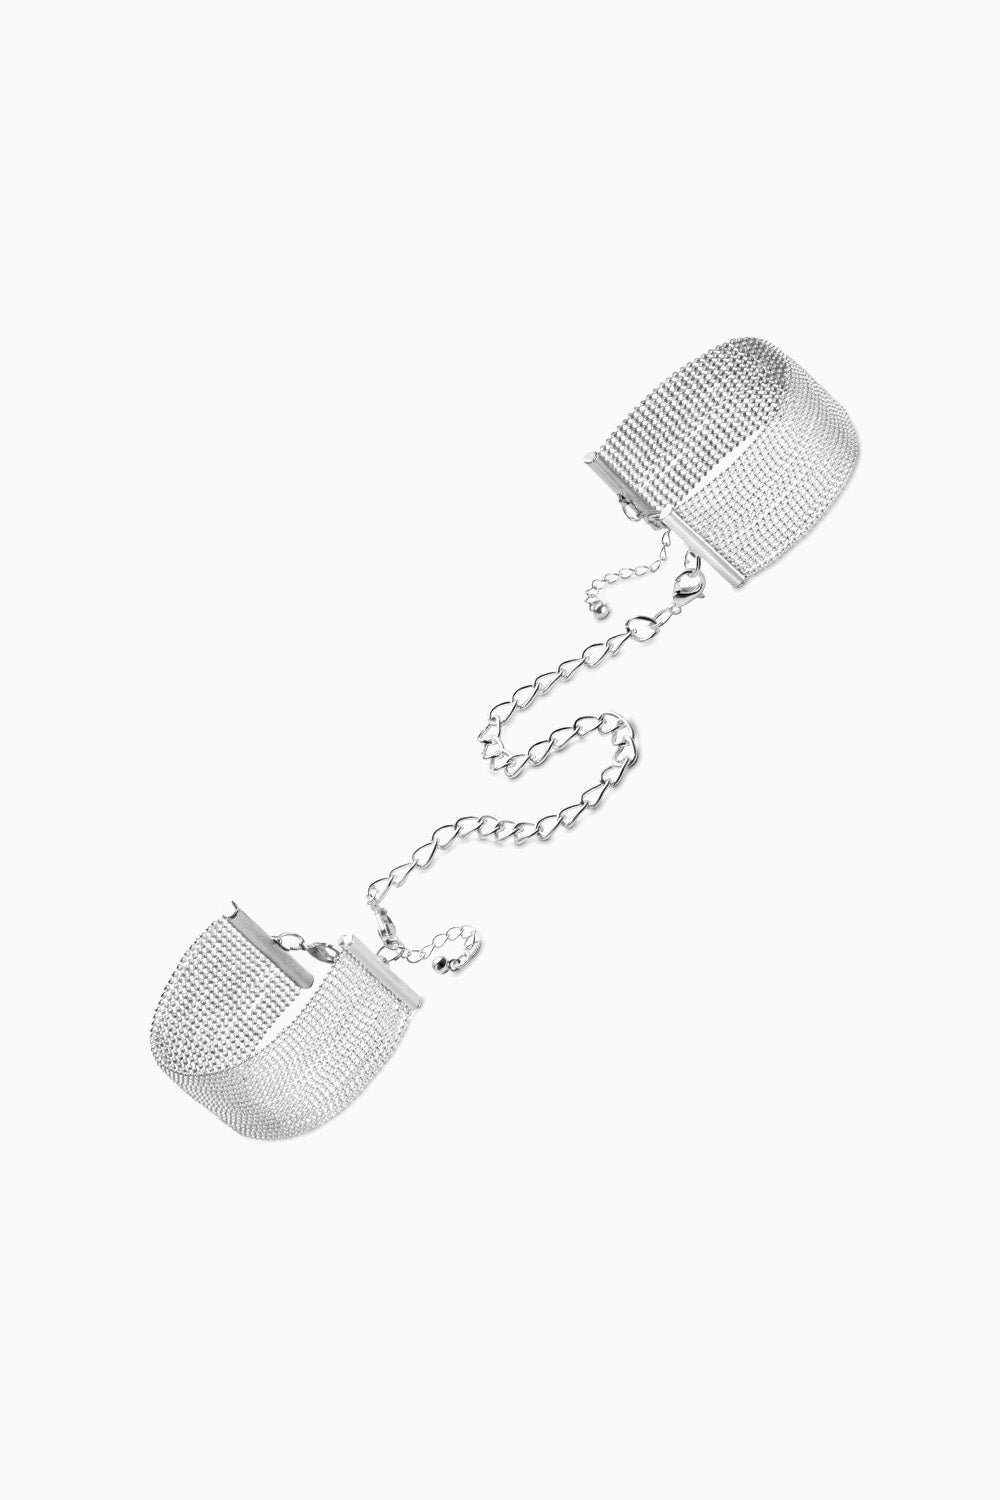 Bijoux Indiscrets Magnifique Restraint Handcuffs Silver